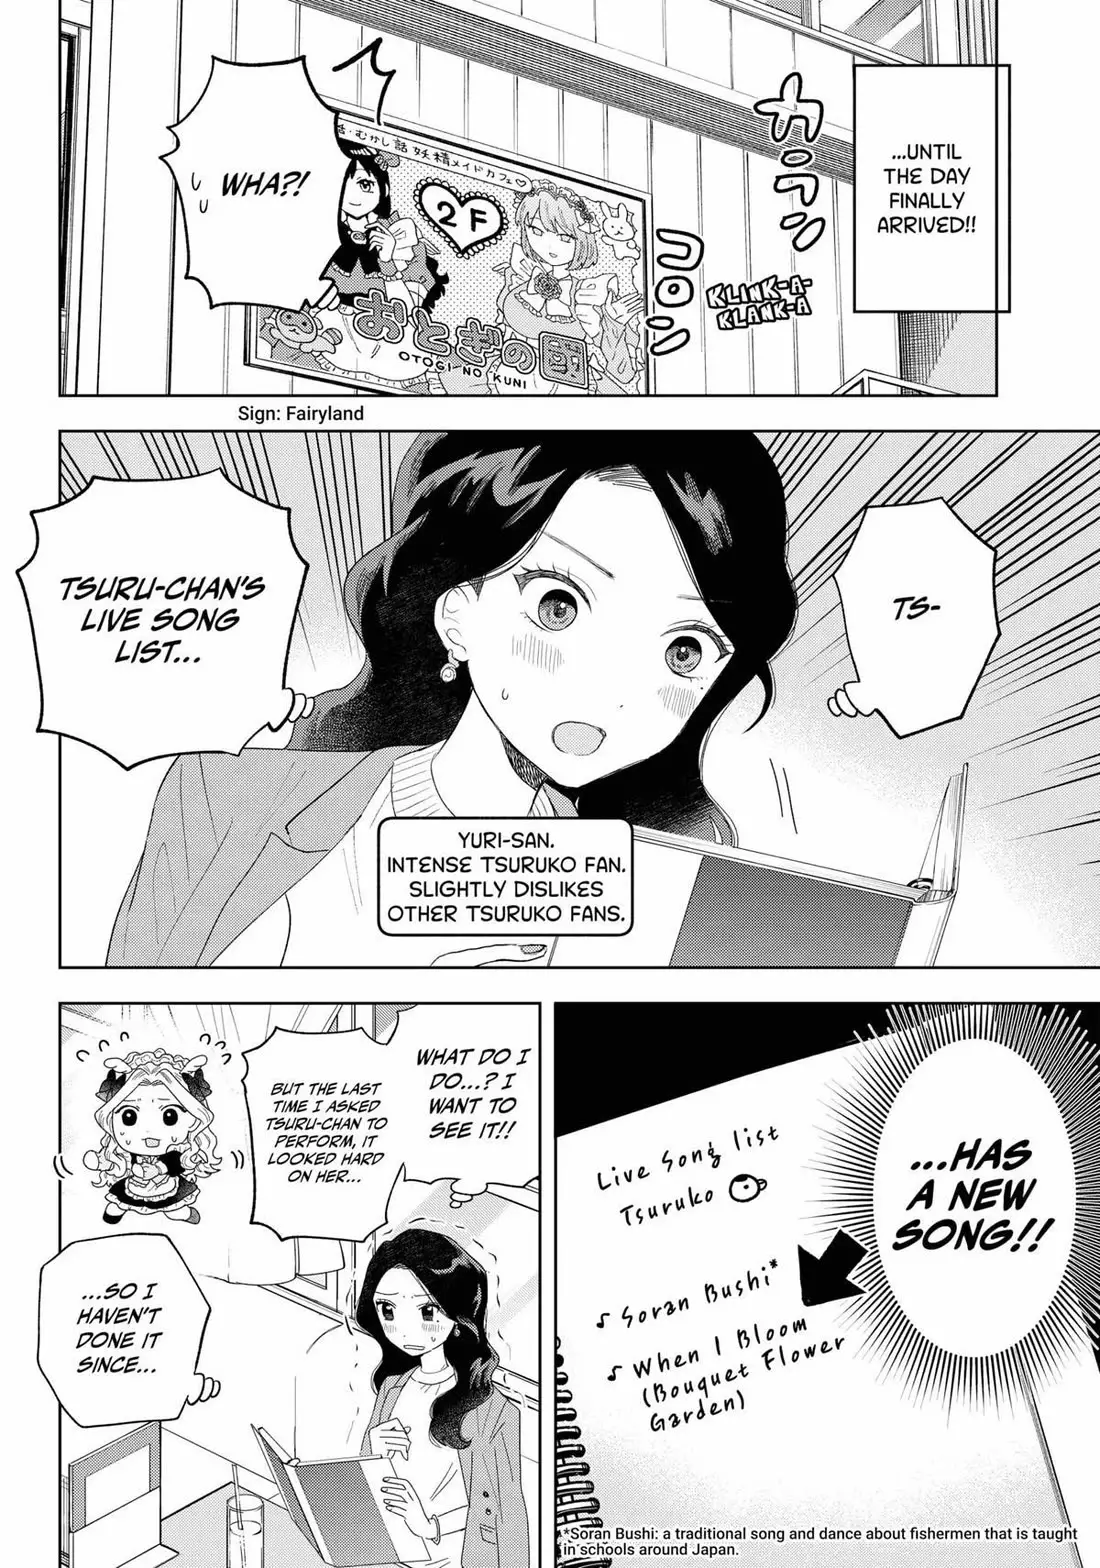 Tsuruko Returns The Favor - 18 page 12-e08e049d